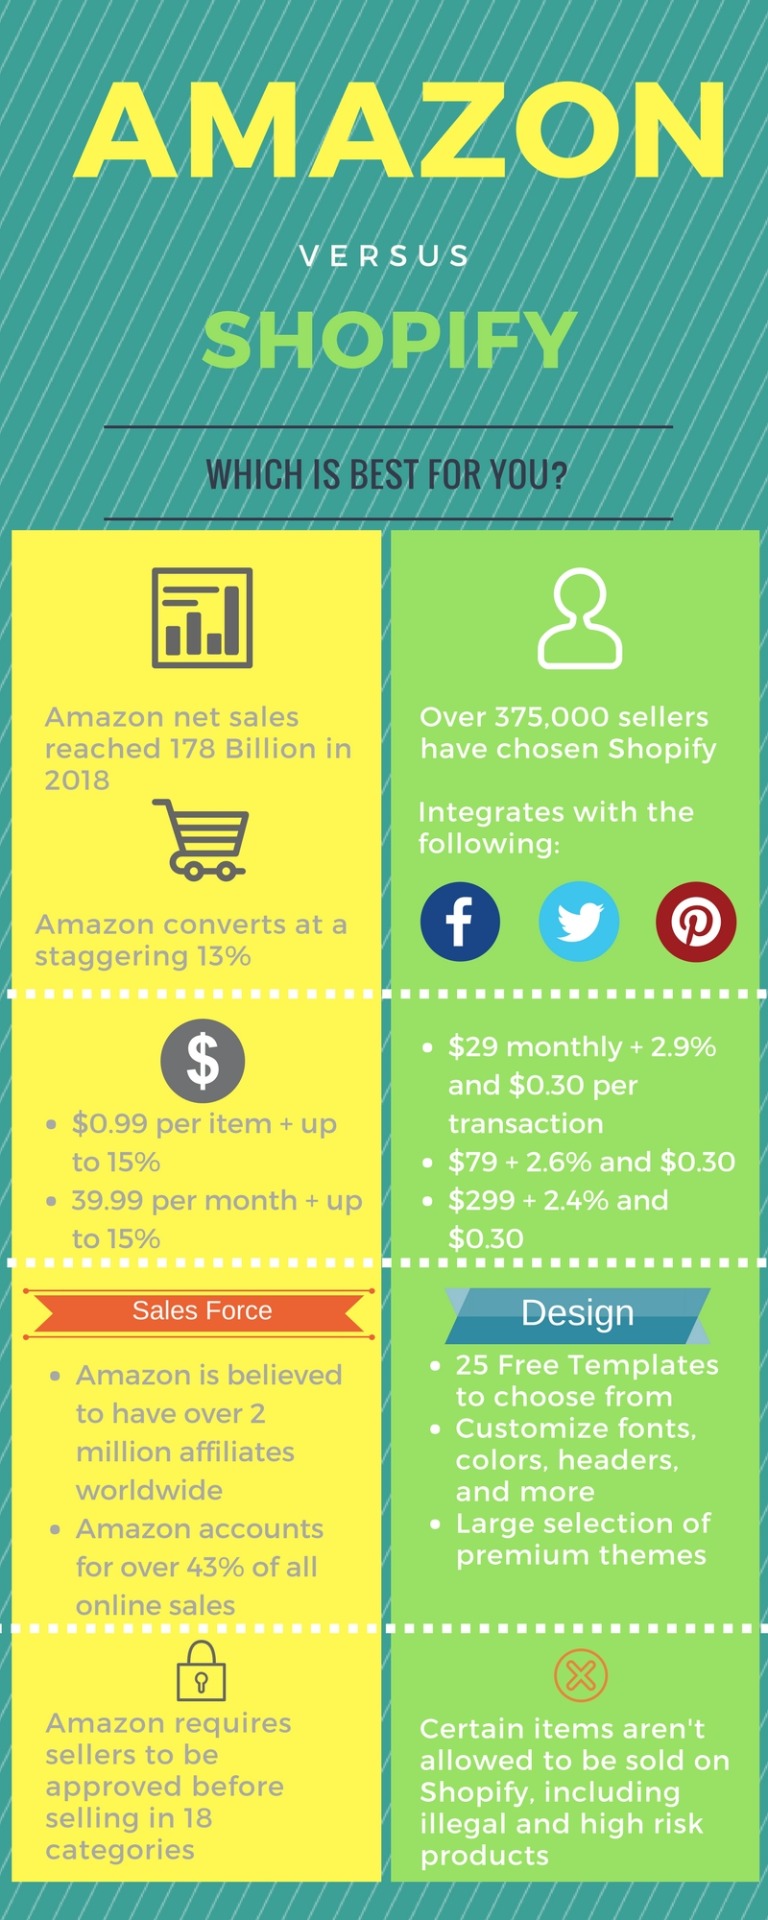 amazon-vs-shopify-infographic-plaza